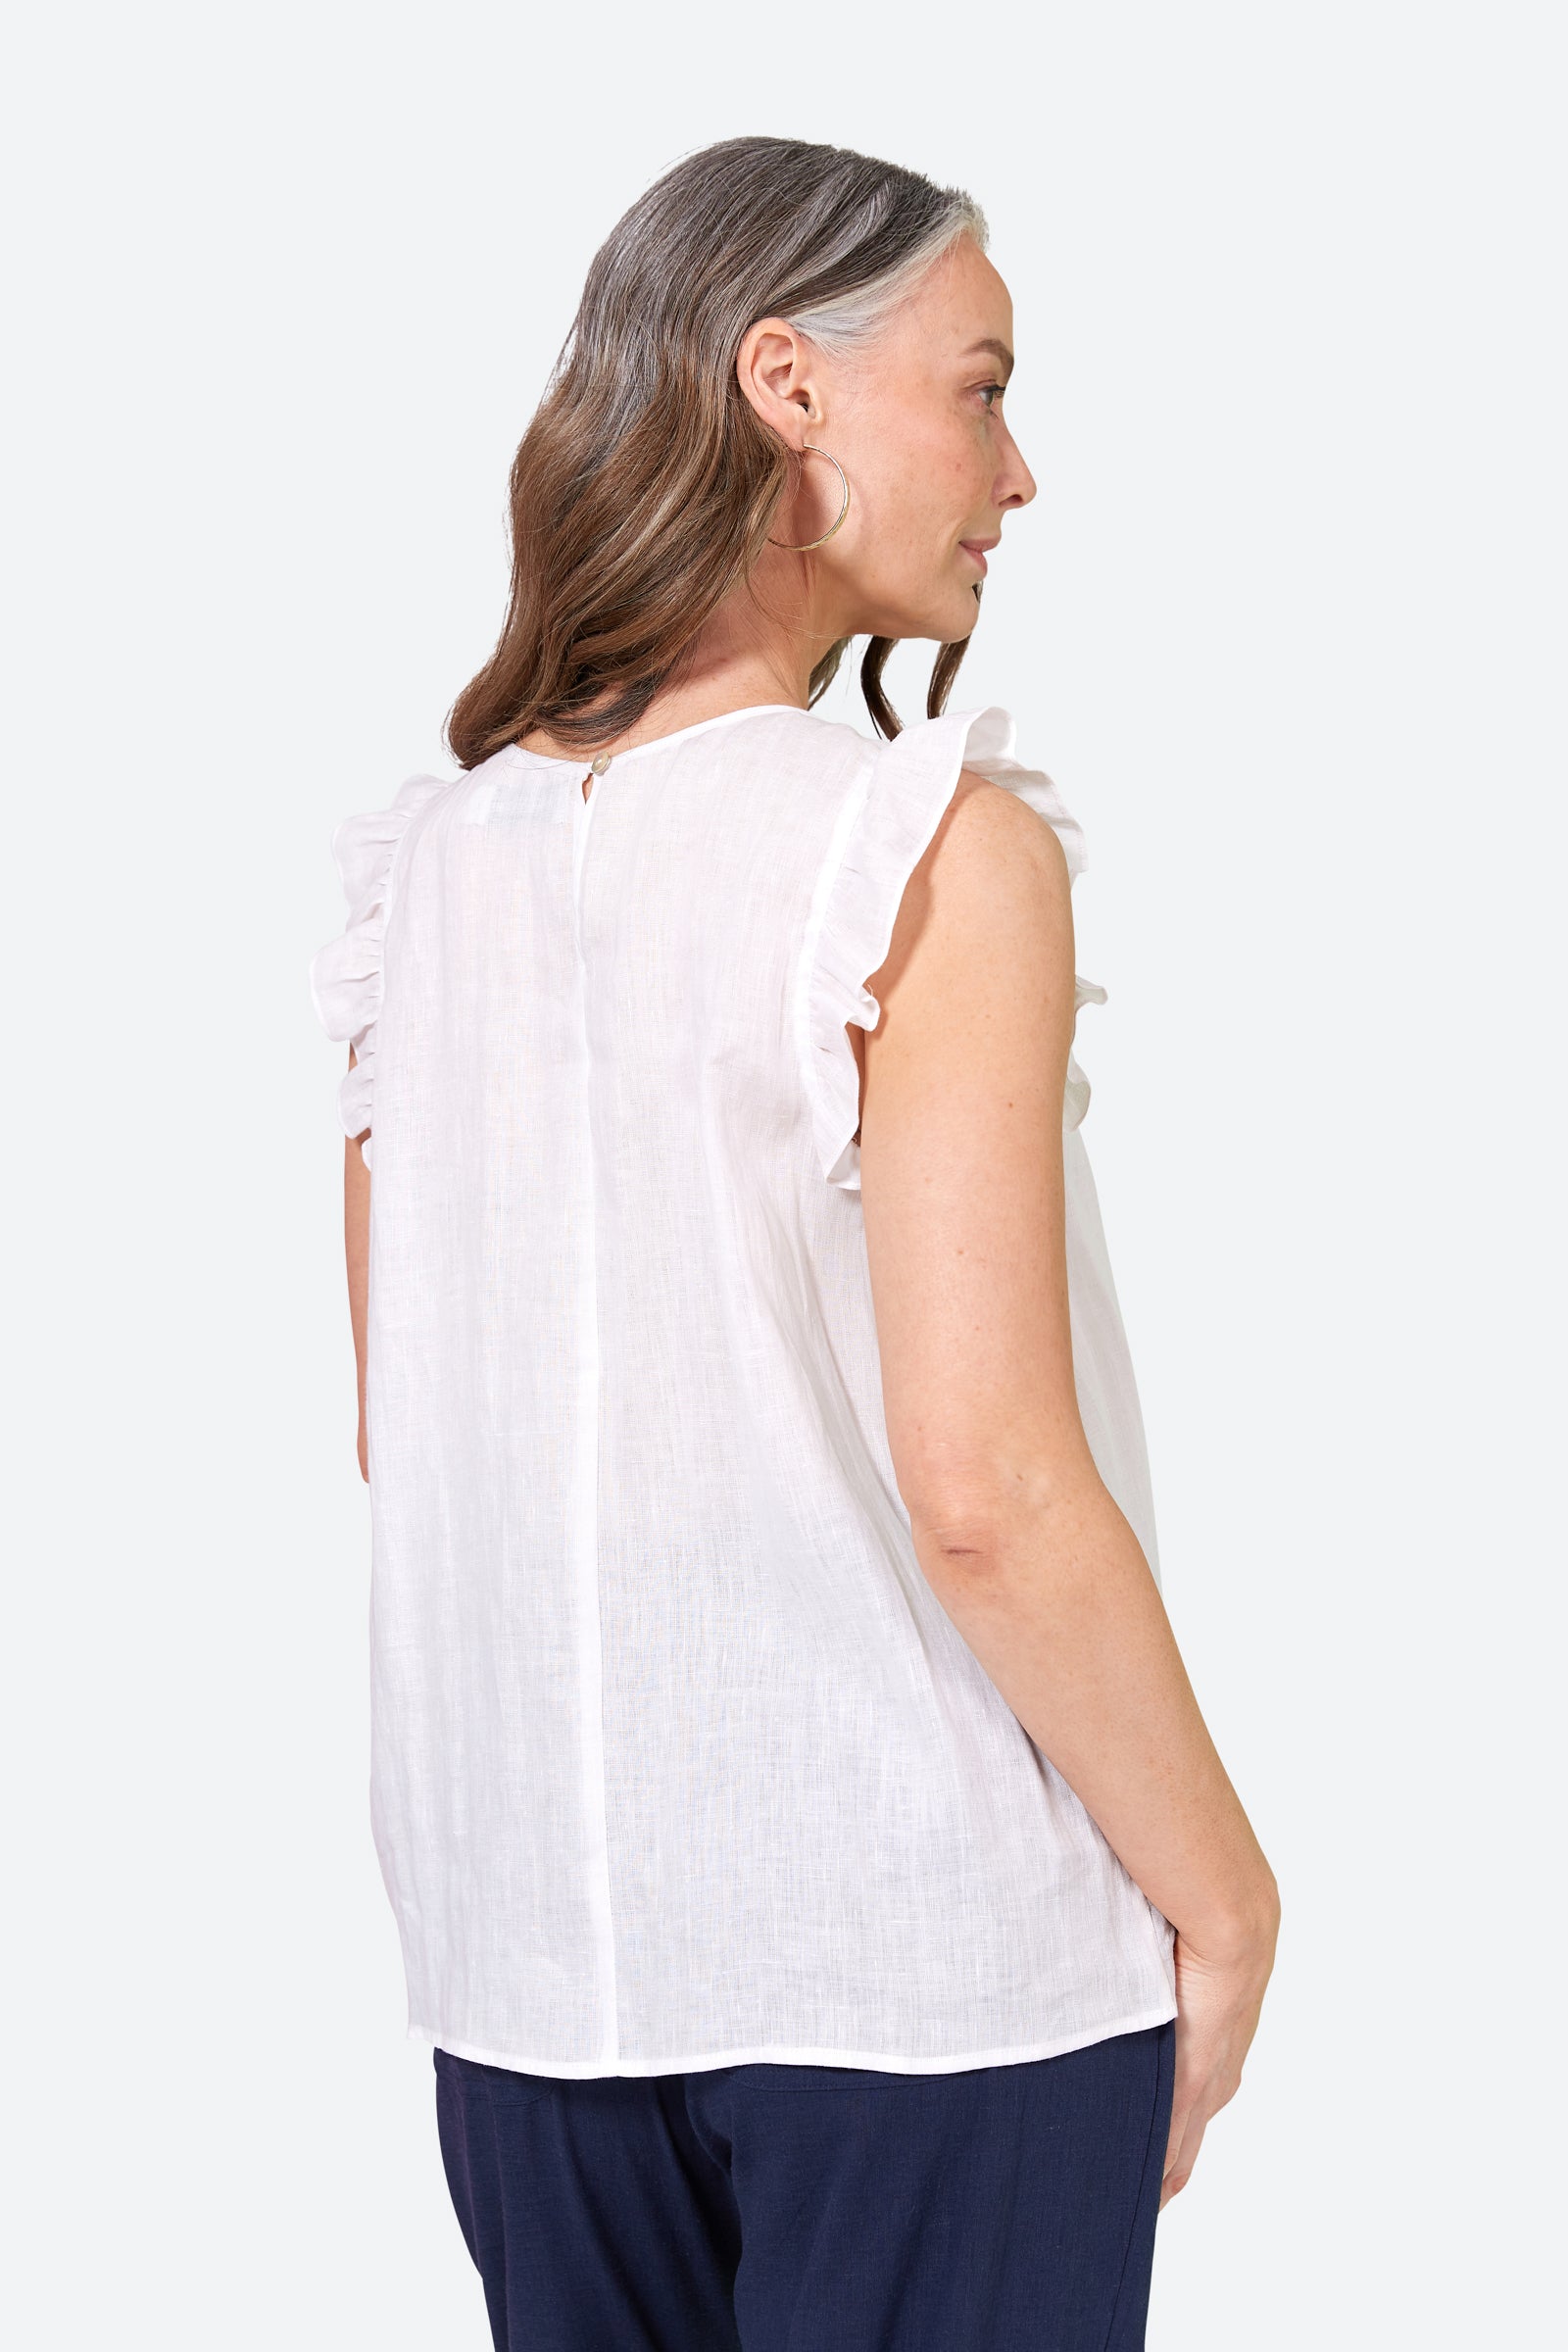 La Vie Frill Top - Blanc - eb&ive Clothing - Top Sleeveless Linen